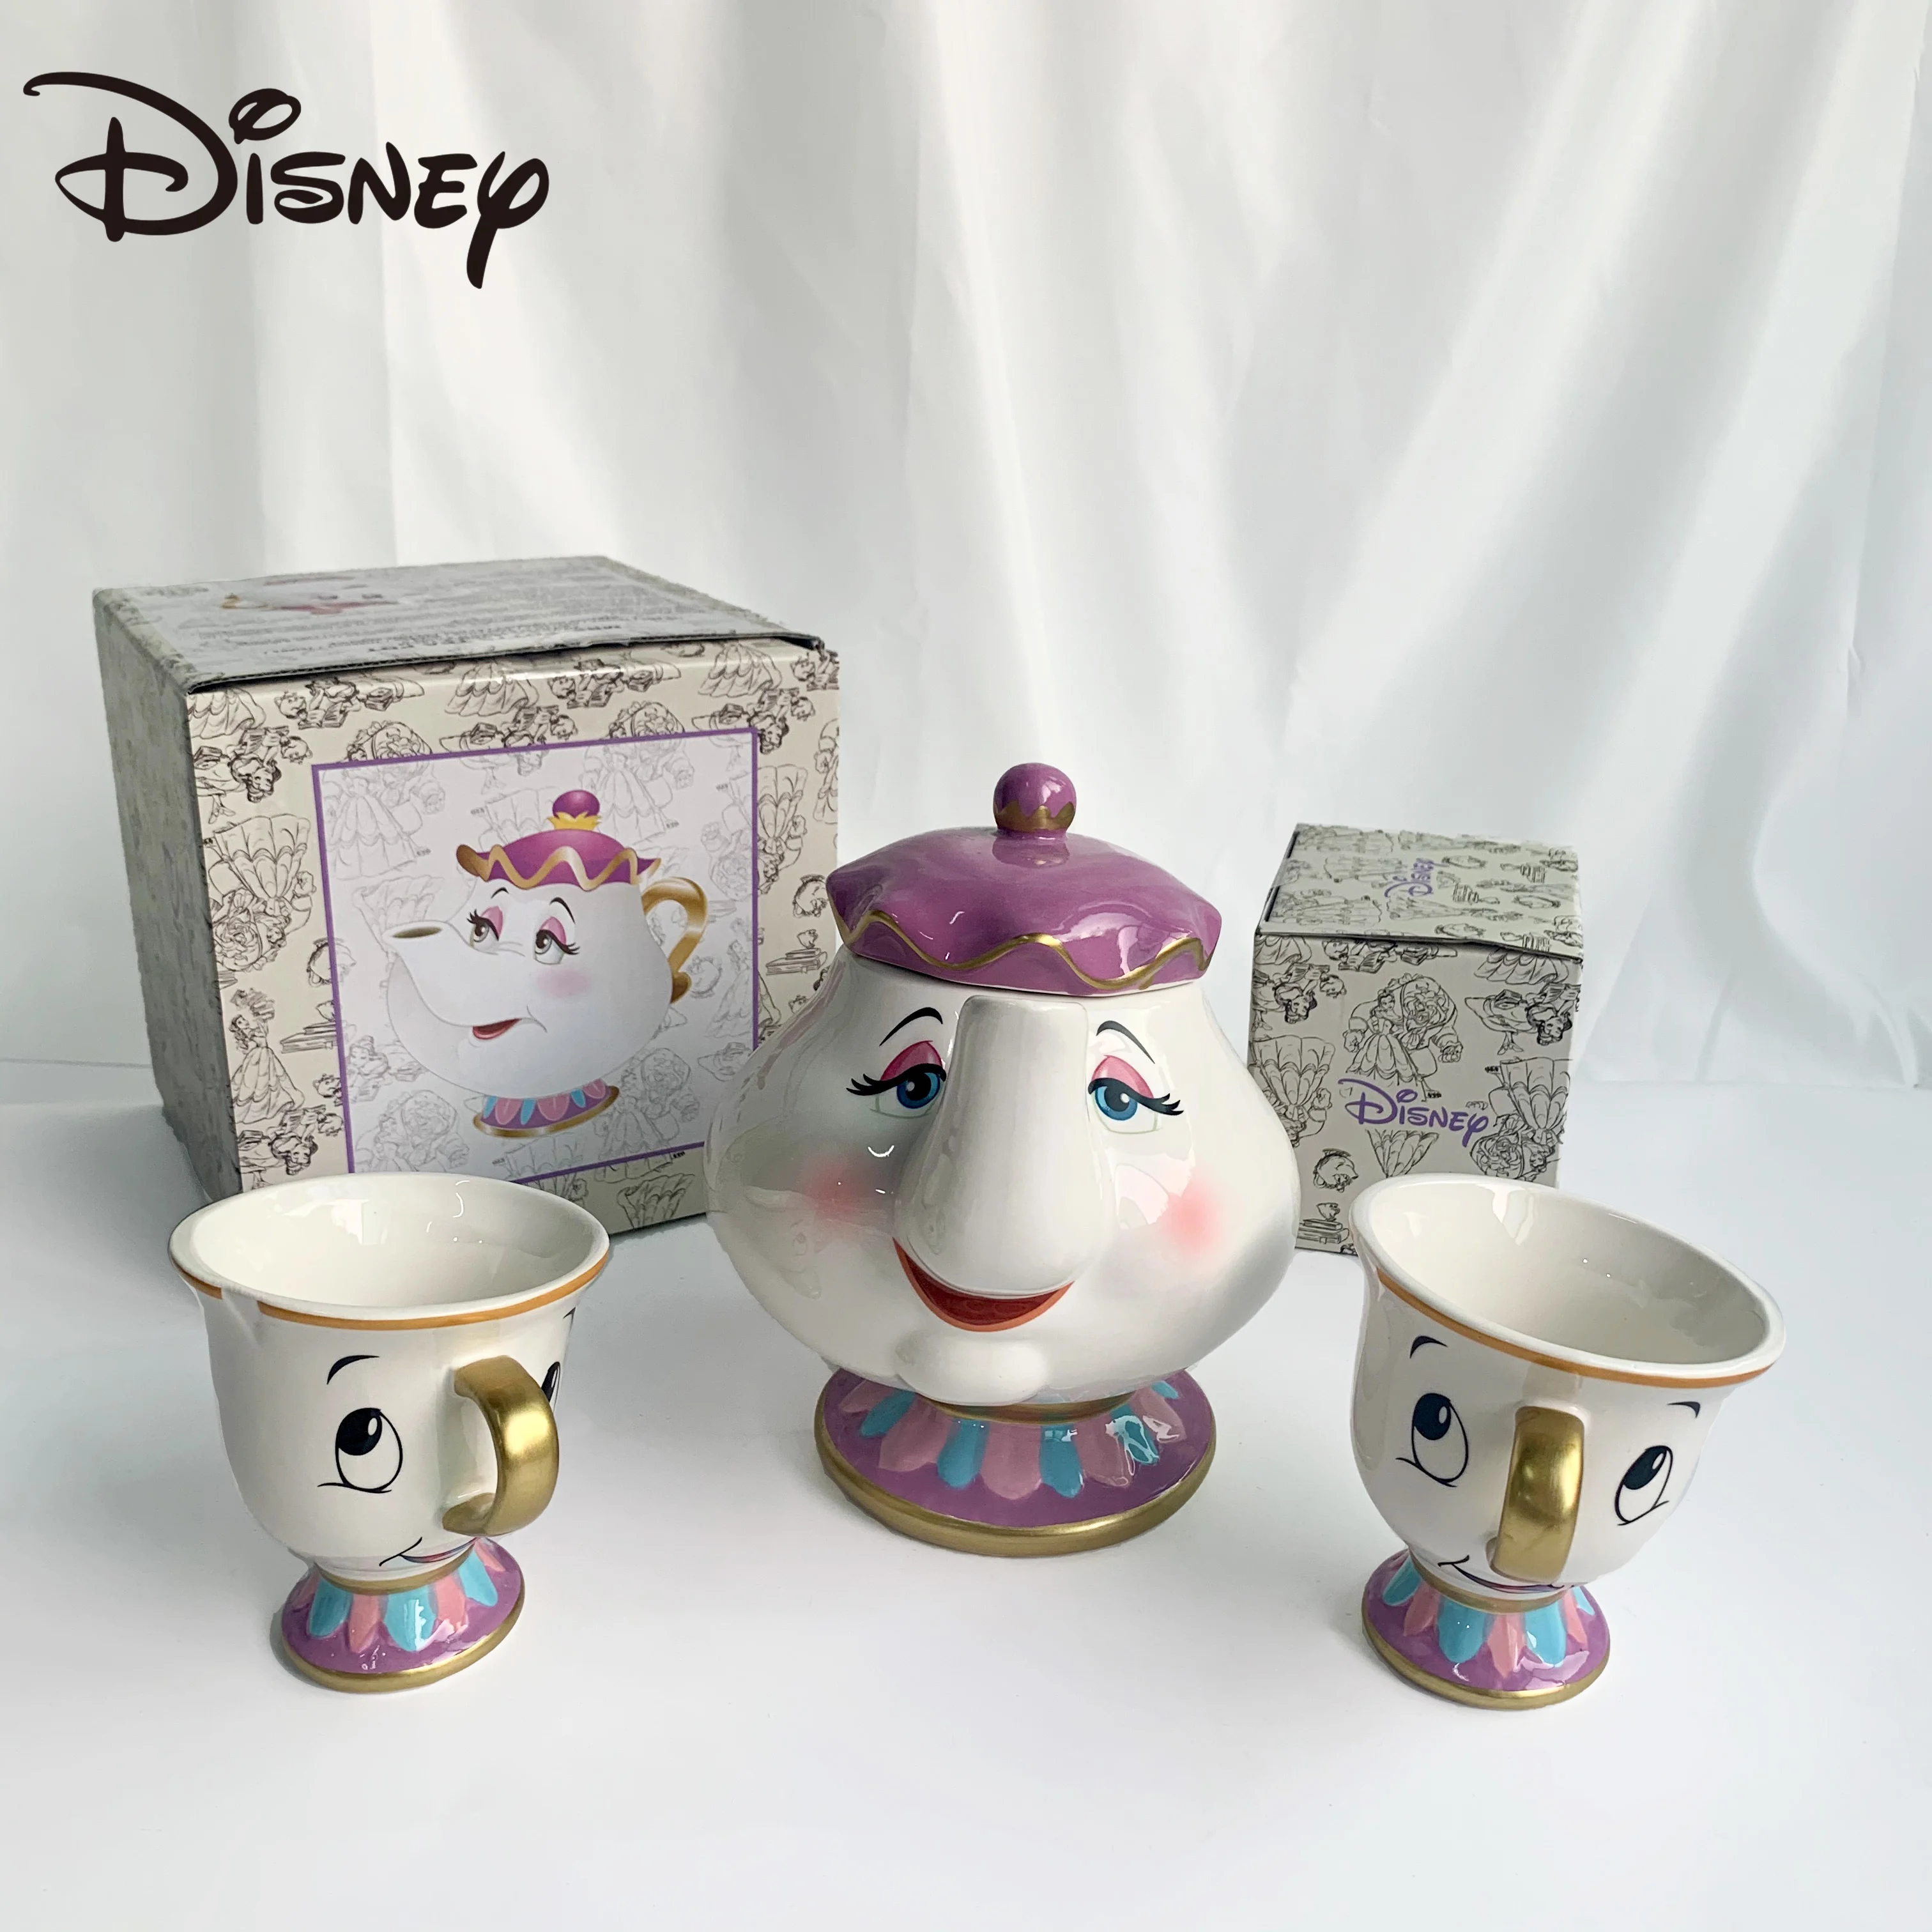 

Disney Mark Cup Beauty and Beast Tea Lady Teapot Archie Cup Ceramic Cup Creative Coffee Cup Gift Cup kawaii mug